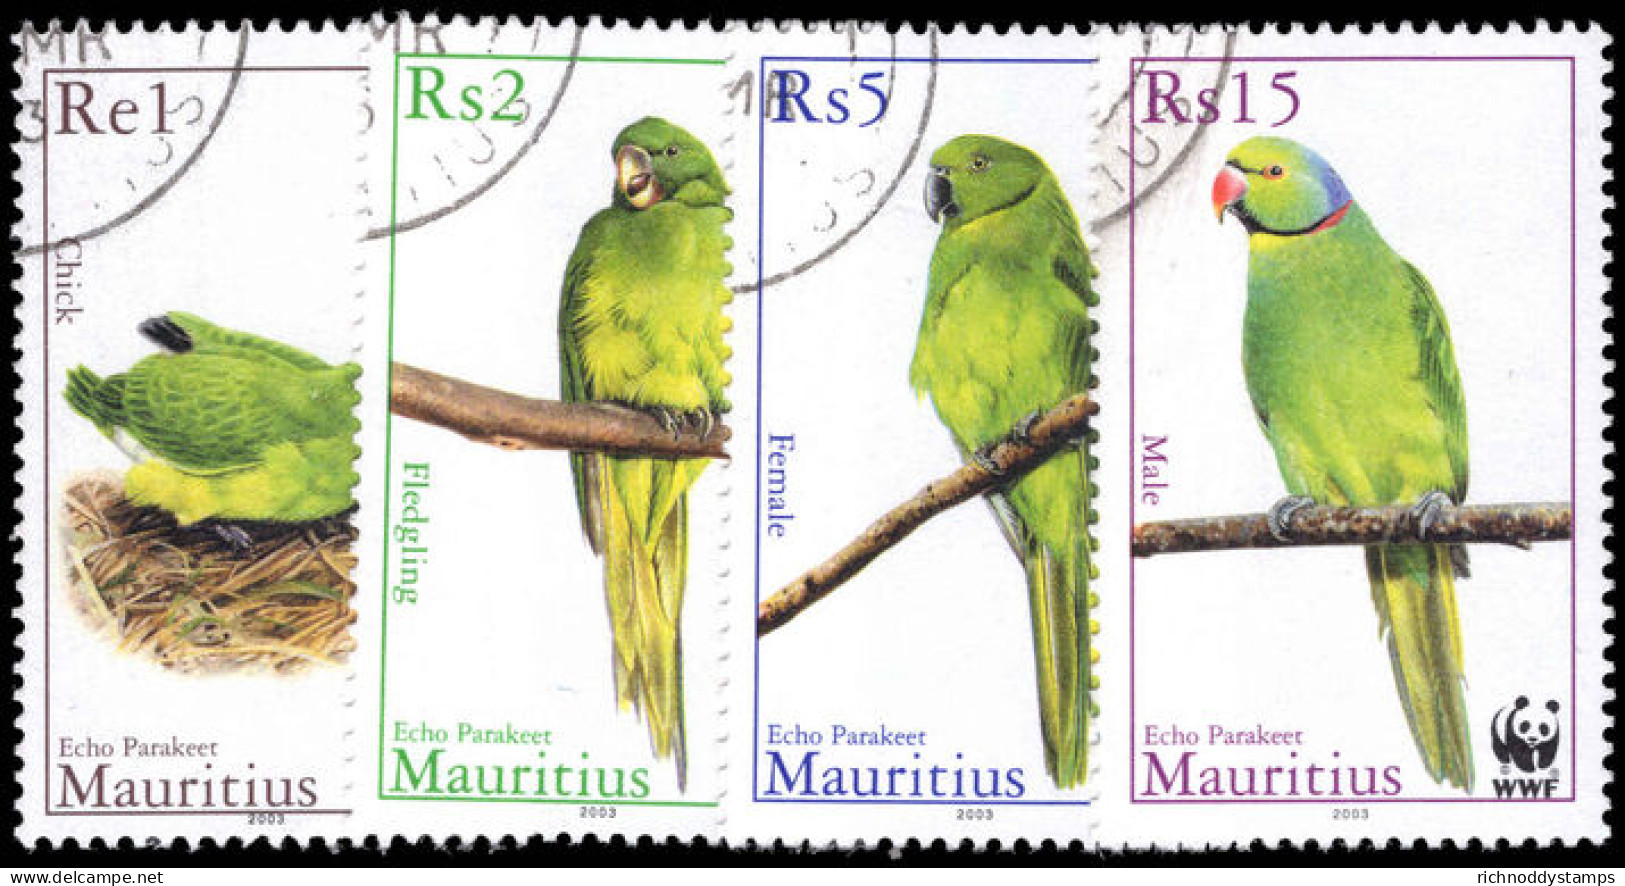 Mauritius 2003 Echo Parakeet Fine Used. - Mauritius (1968-...)